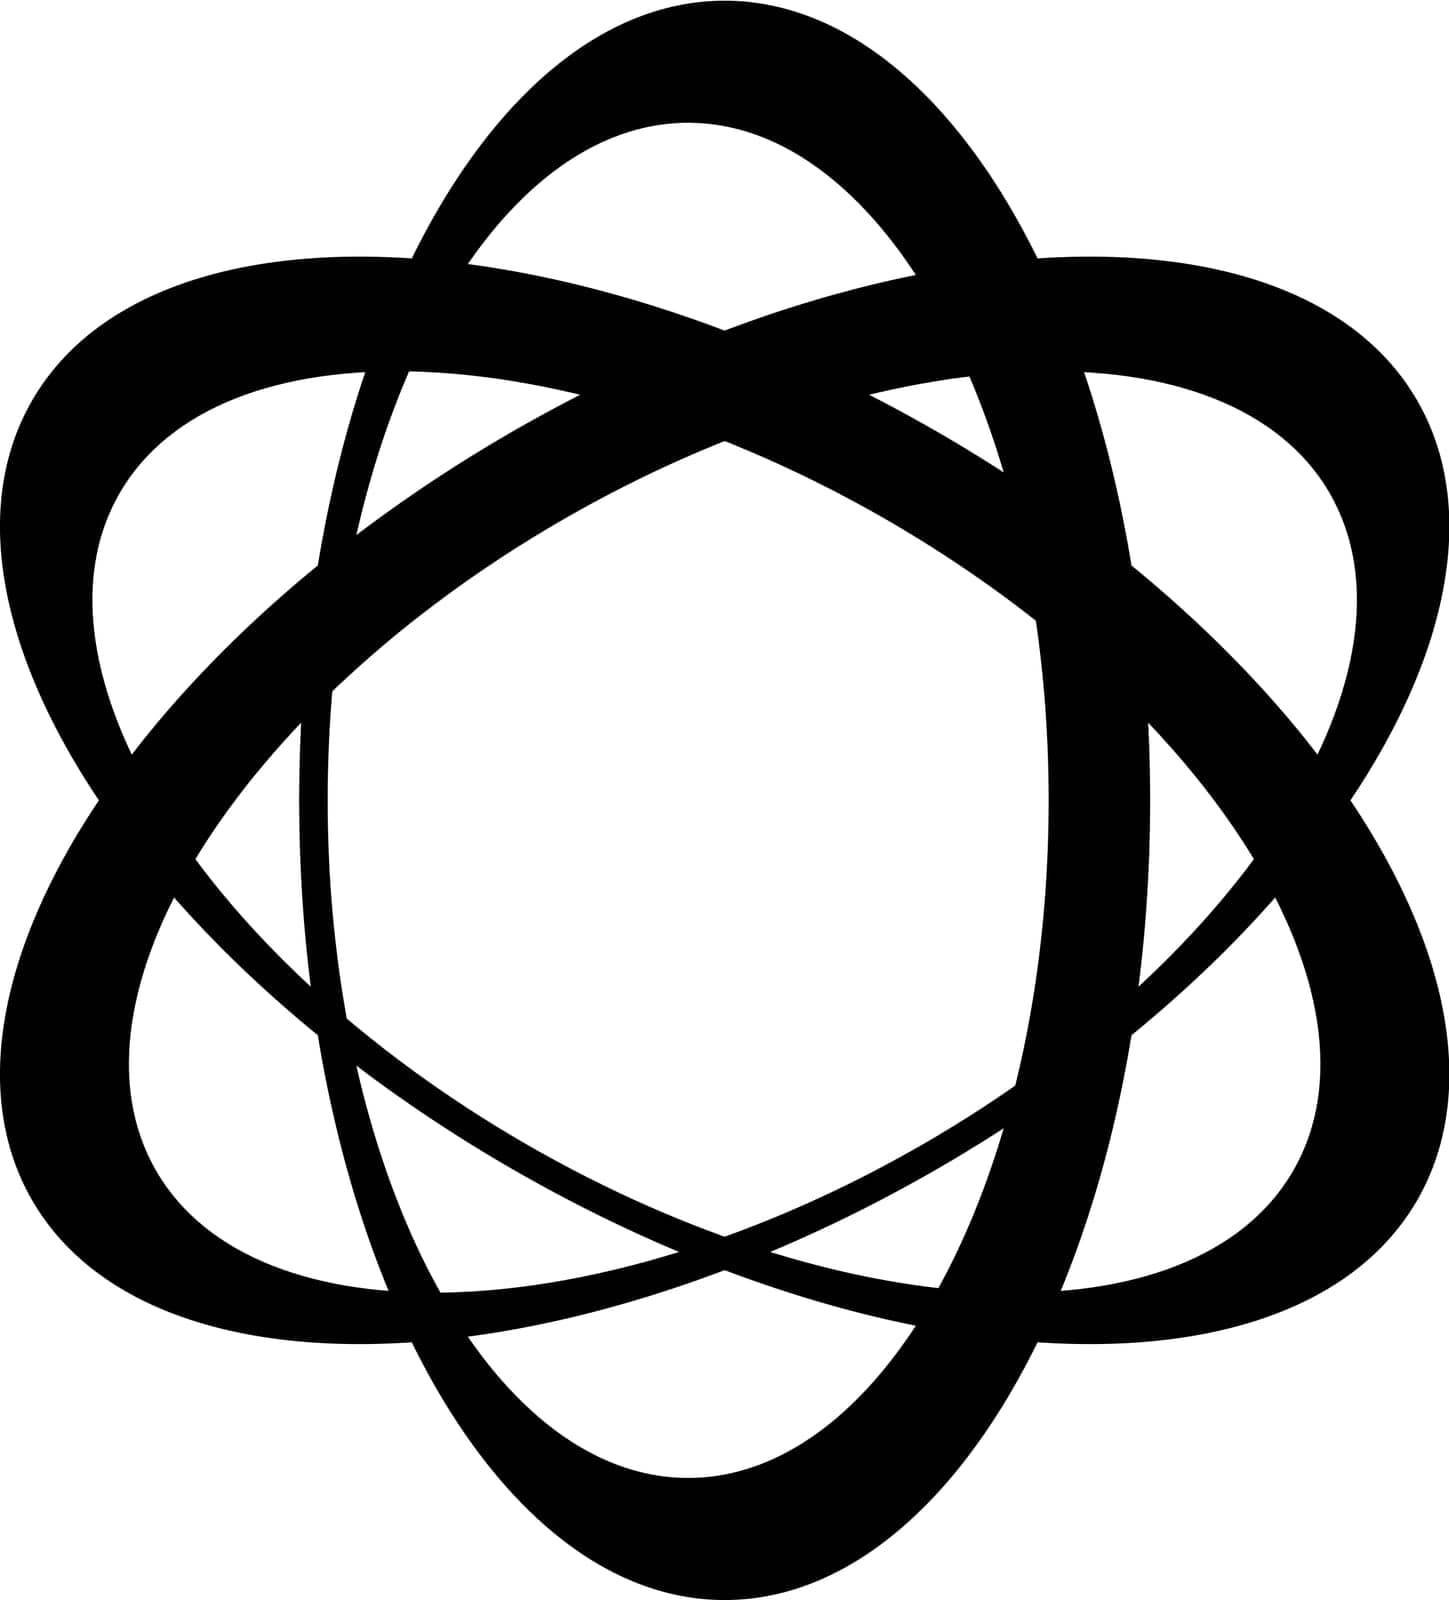 Orbit logo, three elipse displaced center, around nucleus concept molecule